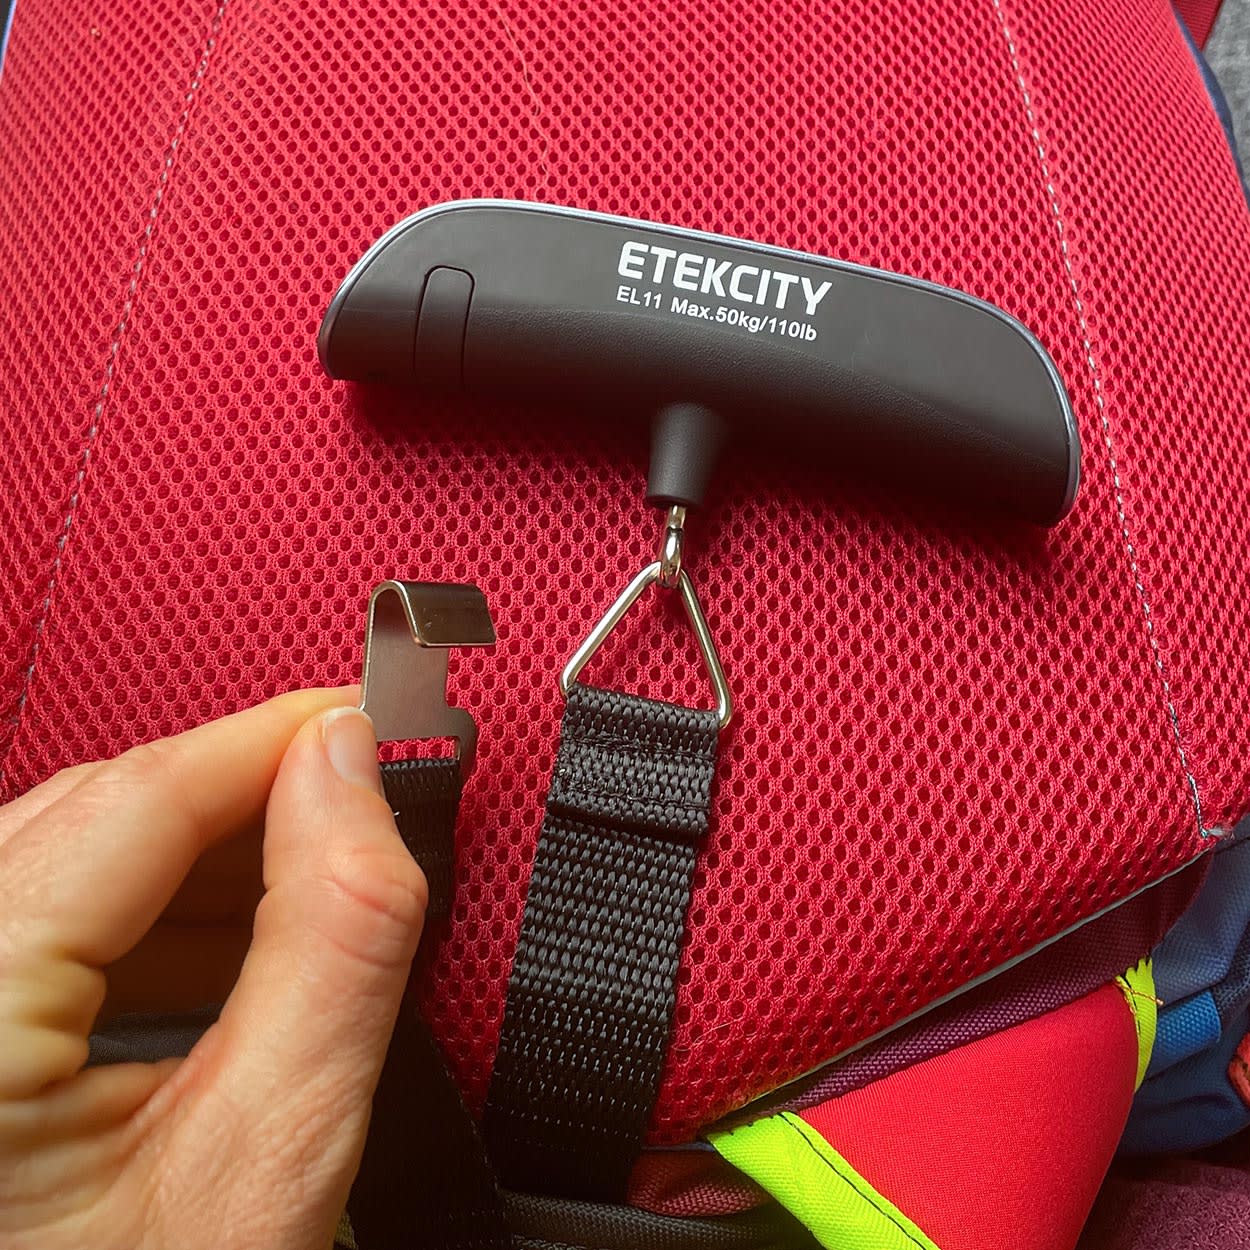 Etekcity Digital Portable Handheld Baggage Scale For Travel